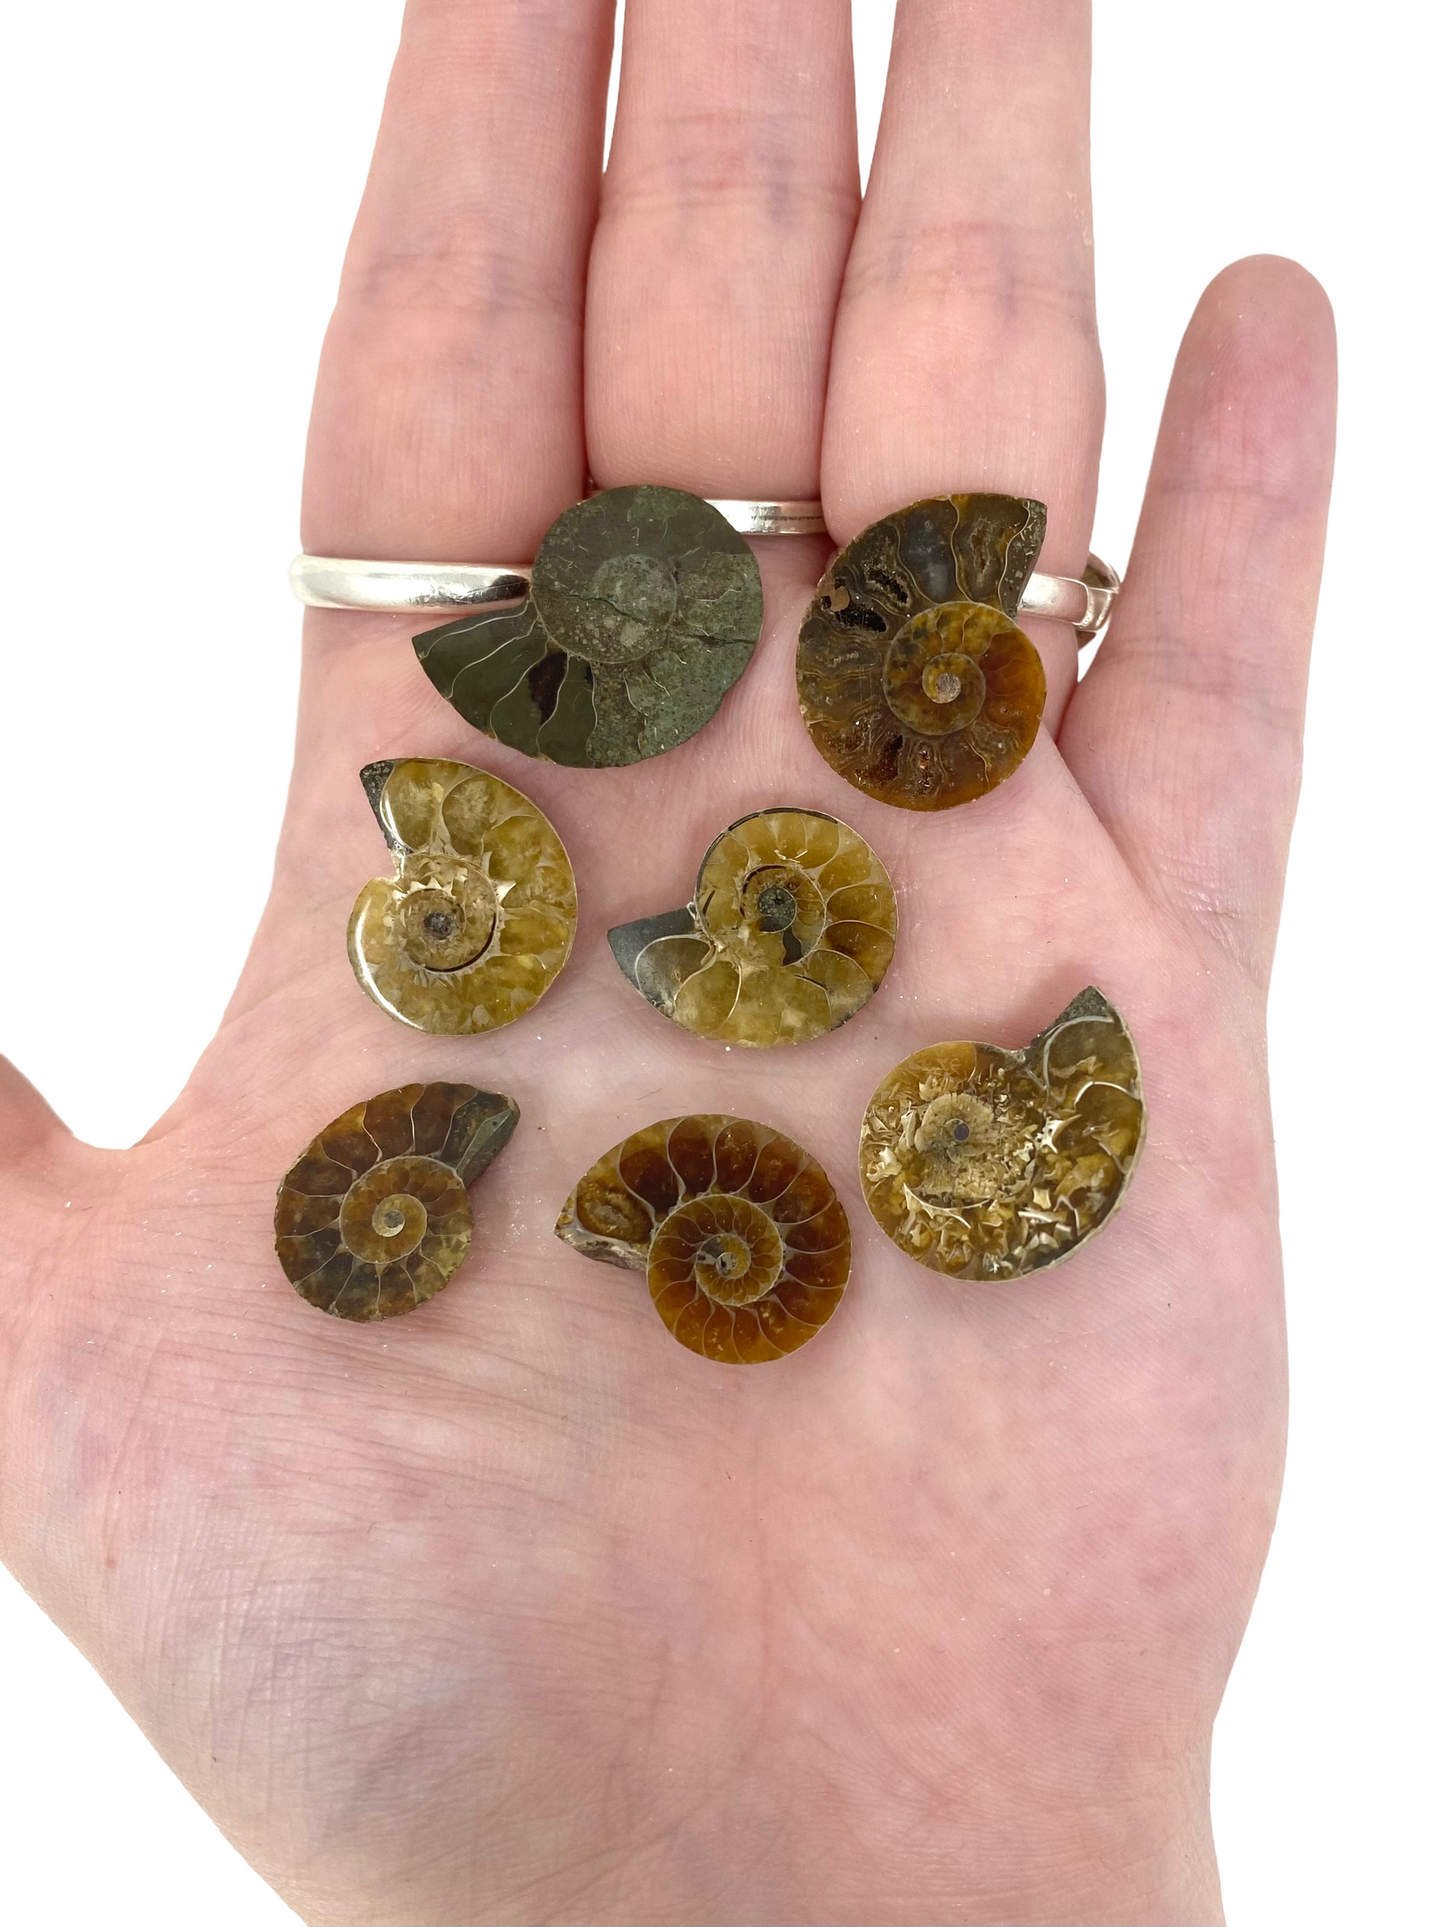 Small Ammonites From Madagascar